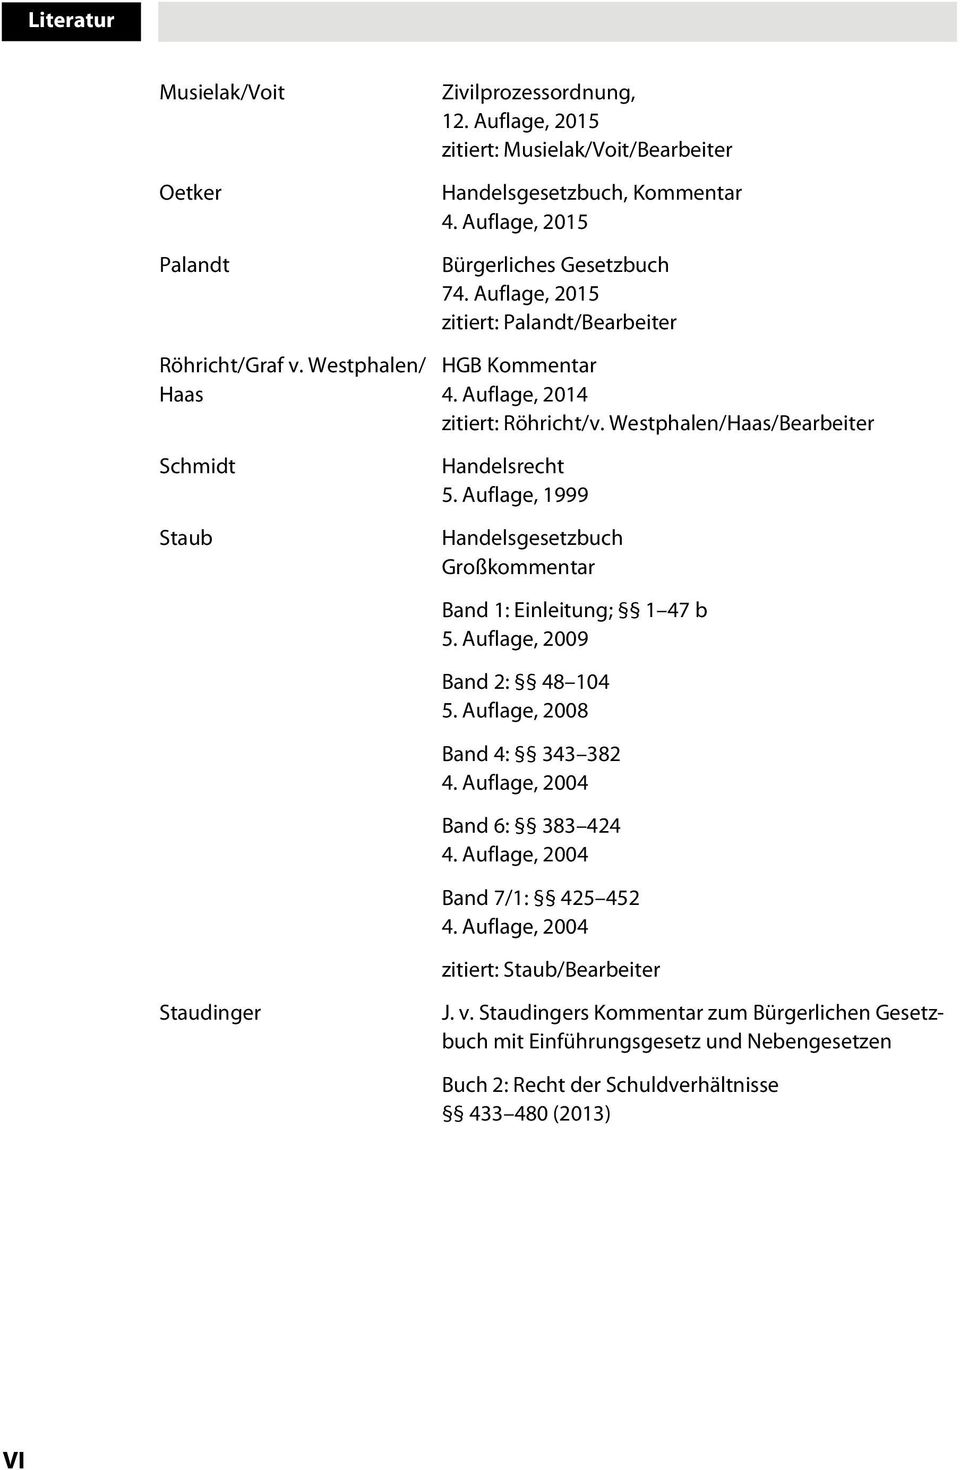 Auflage, 1999 Hadelsgesetzbuch Großkommetar Bad 1: Eileitug; 1 47 b 5. Auflage, 2009 Bad 2: 48 104 5. Auflage, 2008 Bad 4: 343 382 4. Auflage, 2004 Bad 6: 383 424 4.